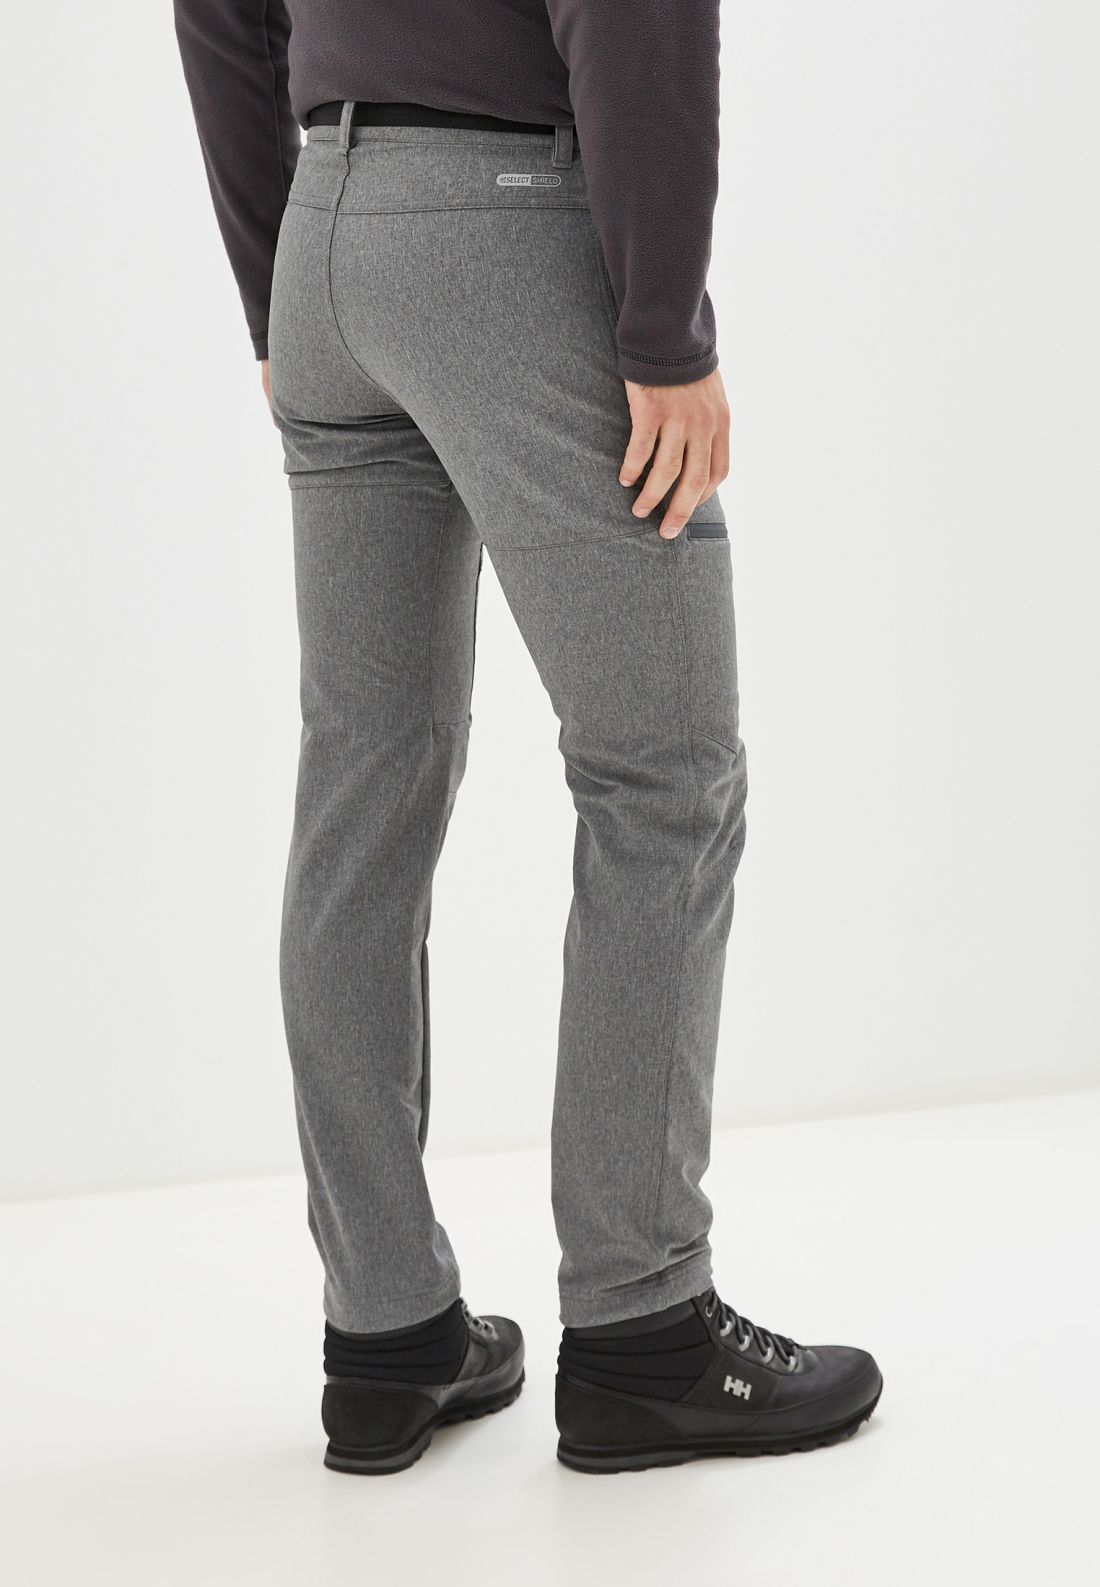 Merrell - Мужские тёплые брюки